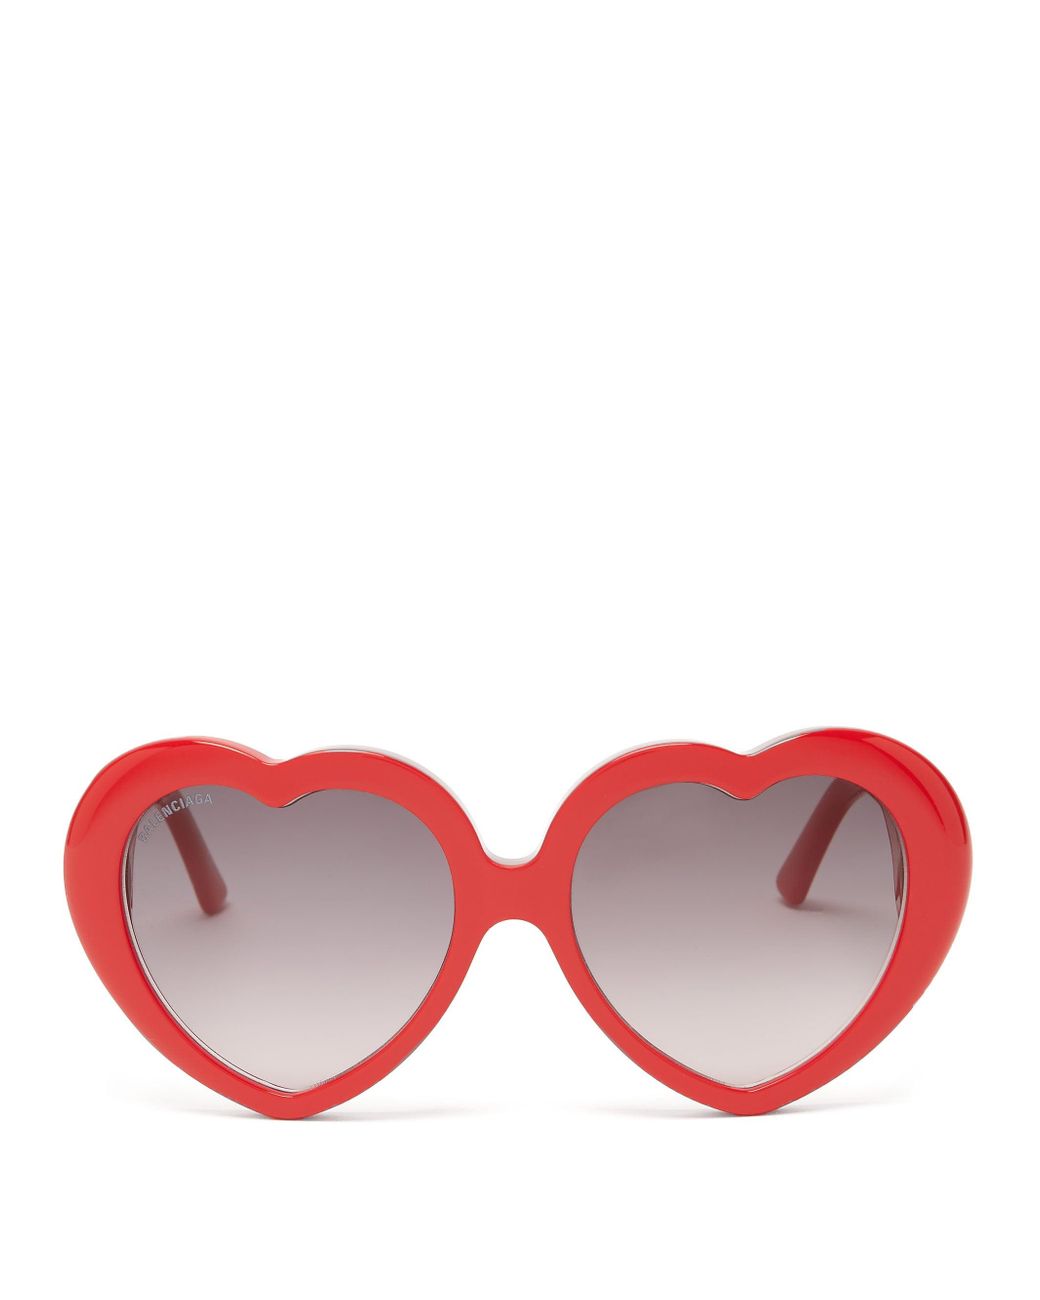 Balenciaga Heart Acetate Sunglasses in Red | Lyst